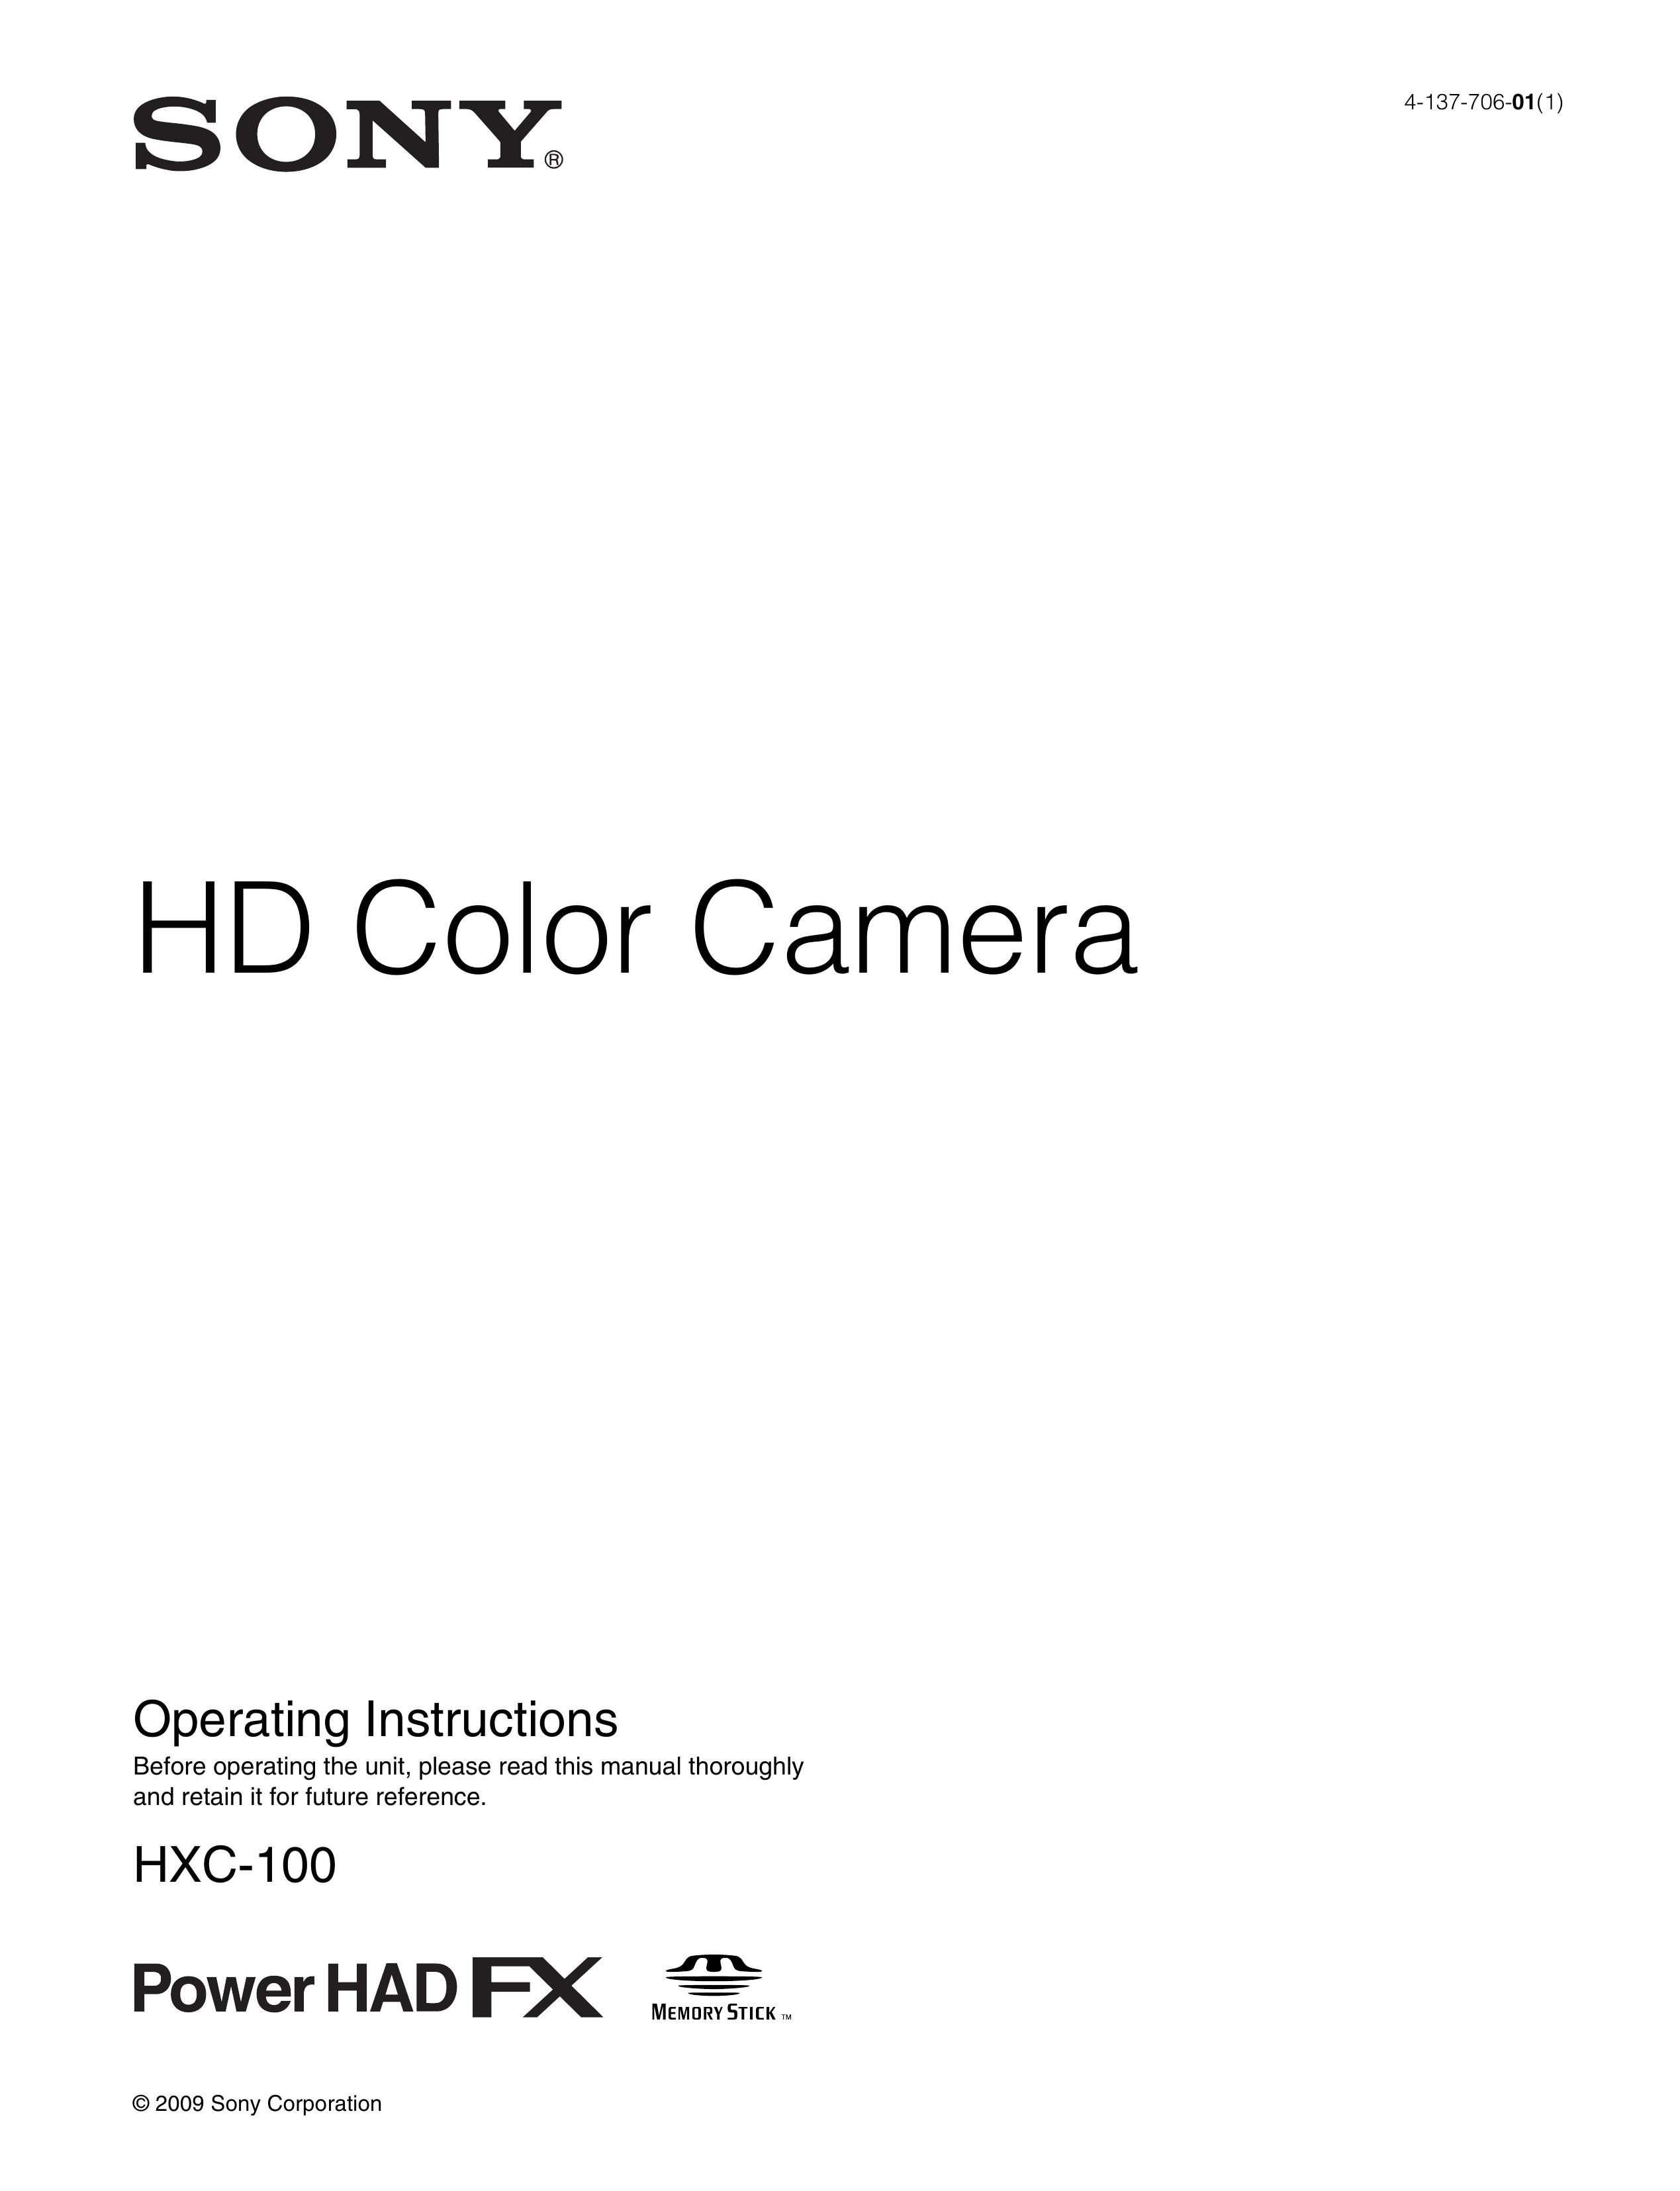 Sony HXC-100 Film Camera User Manual